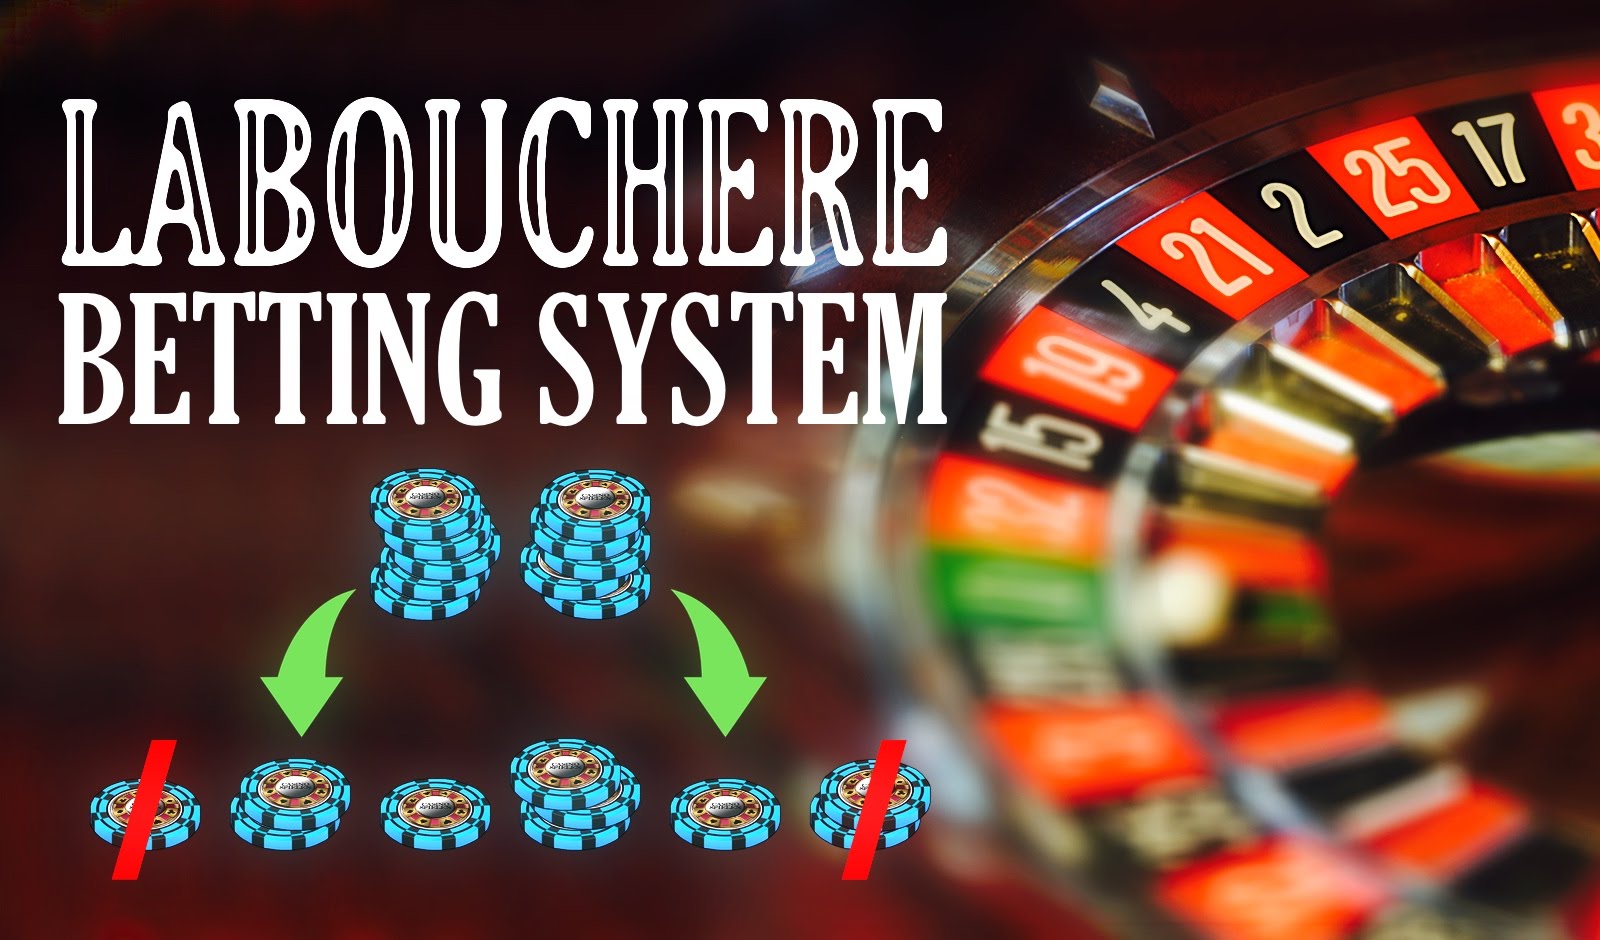 Labouchere betting system